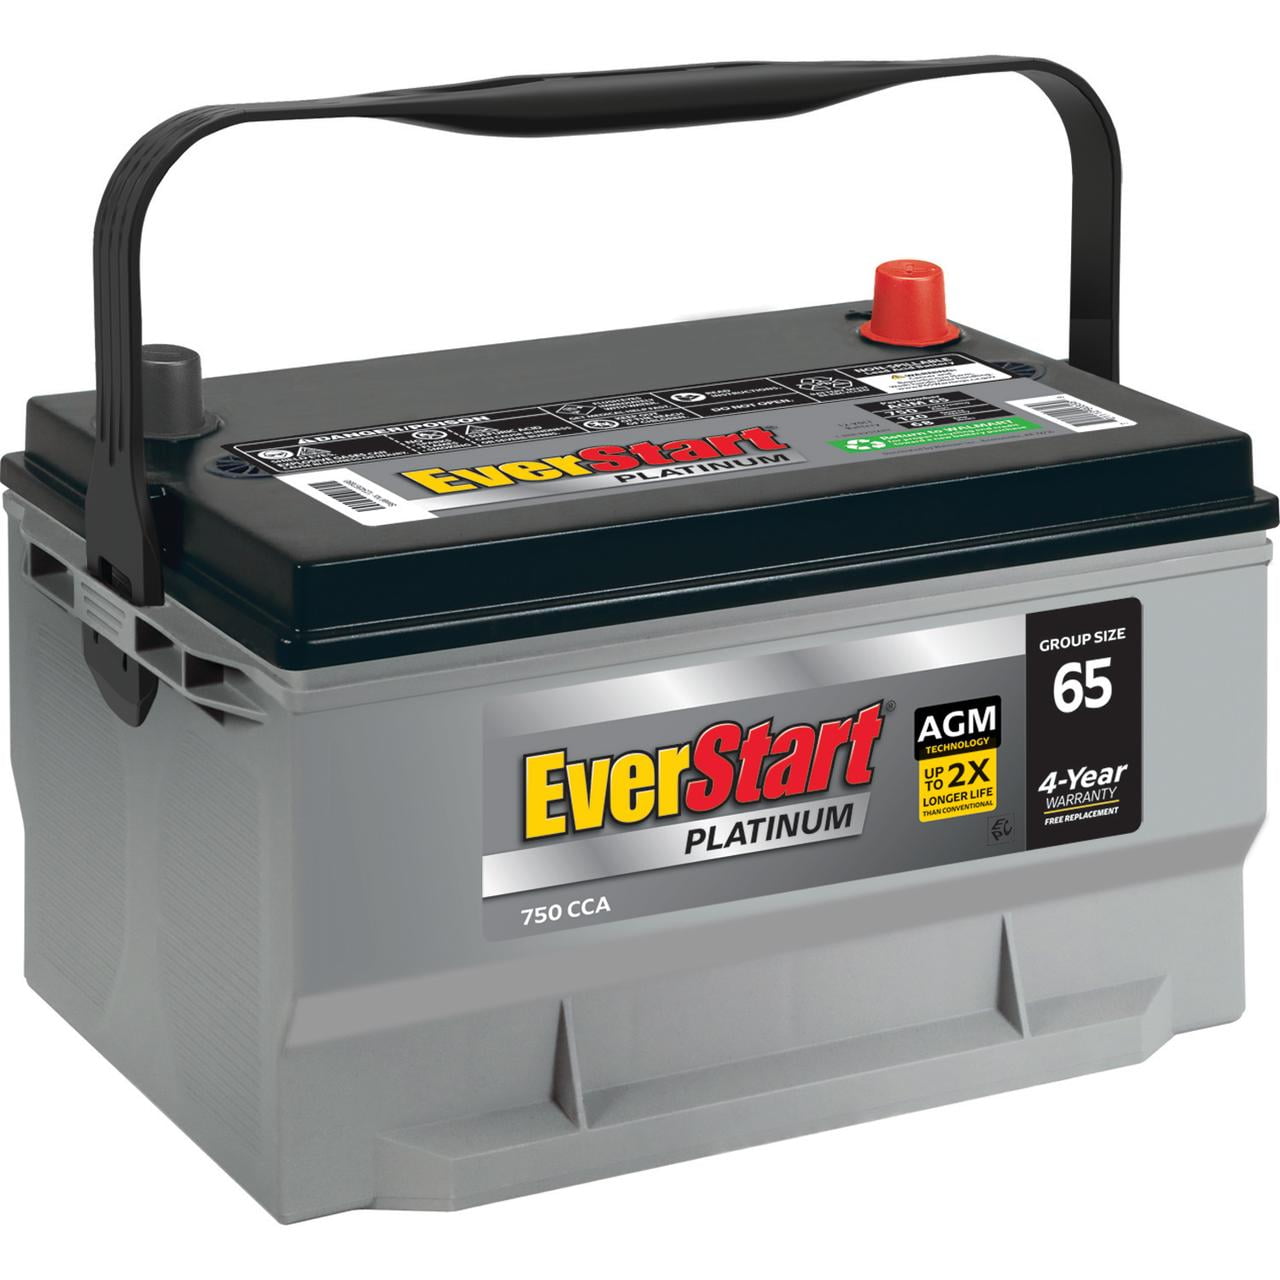 EverStart Platinum BOXED AGM Battery, Group Size 65 12 Volt, 750 CCA